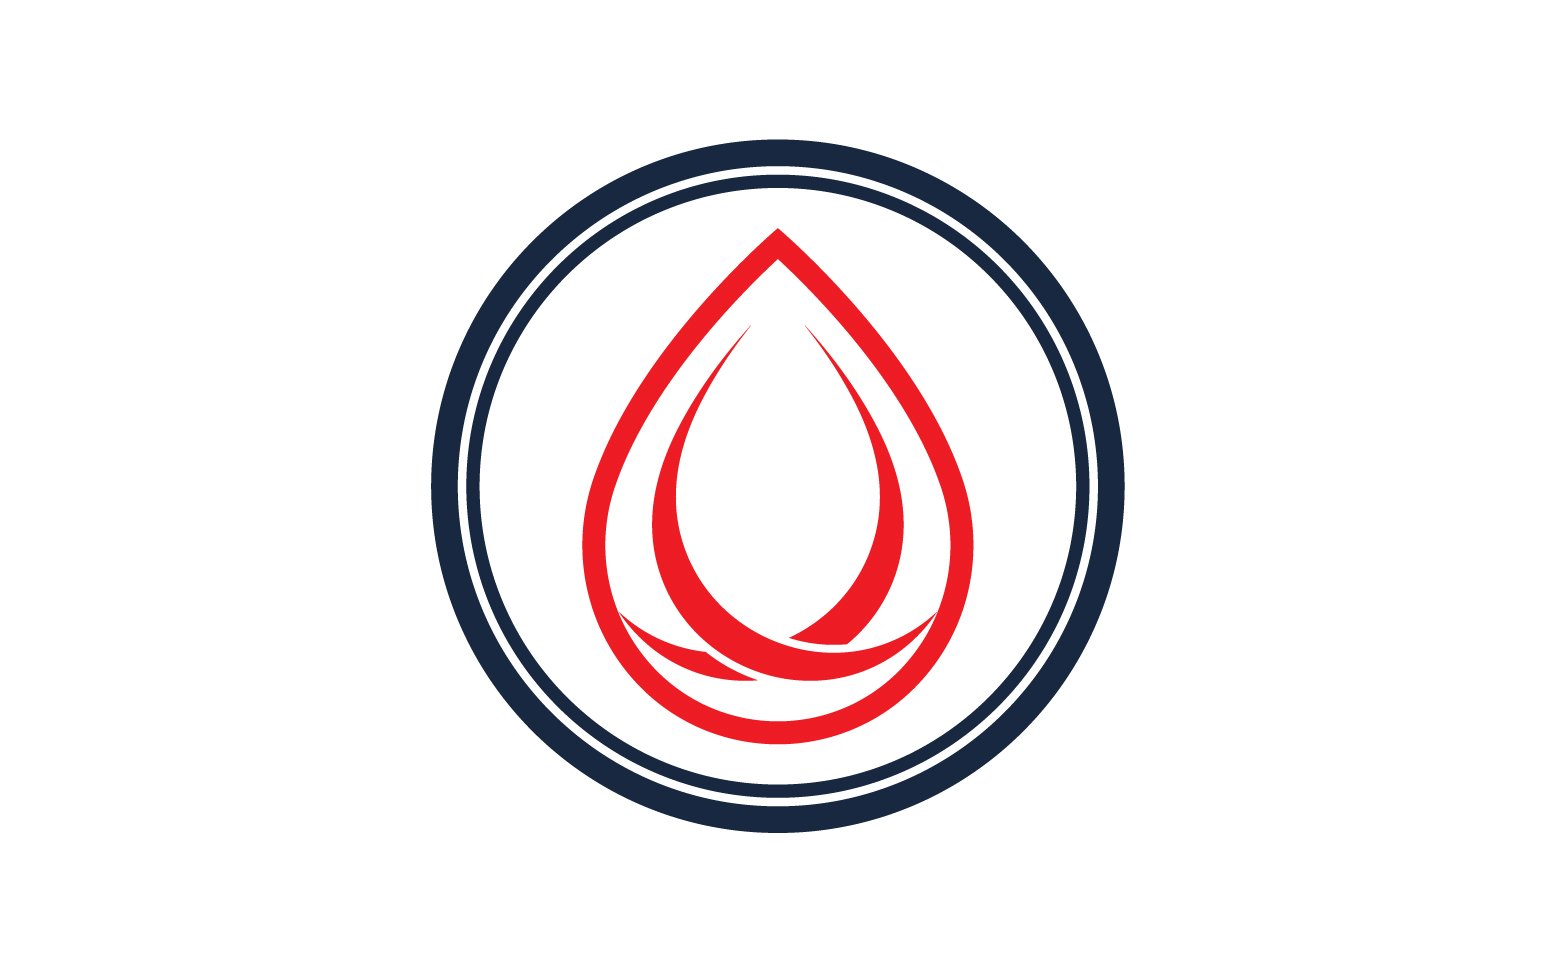 Blood drop icon logo template version v28